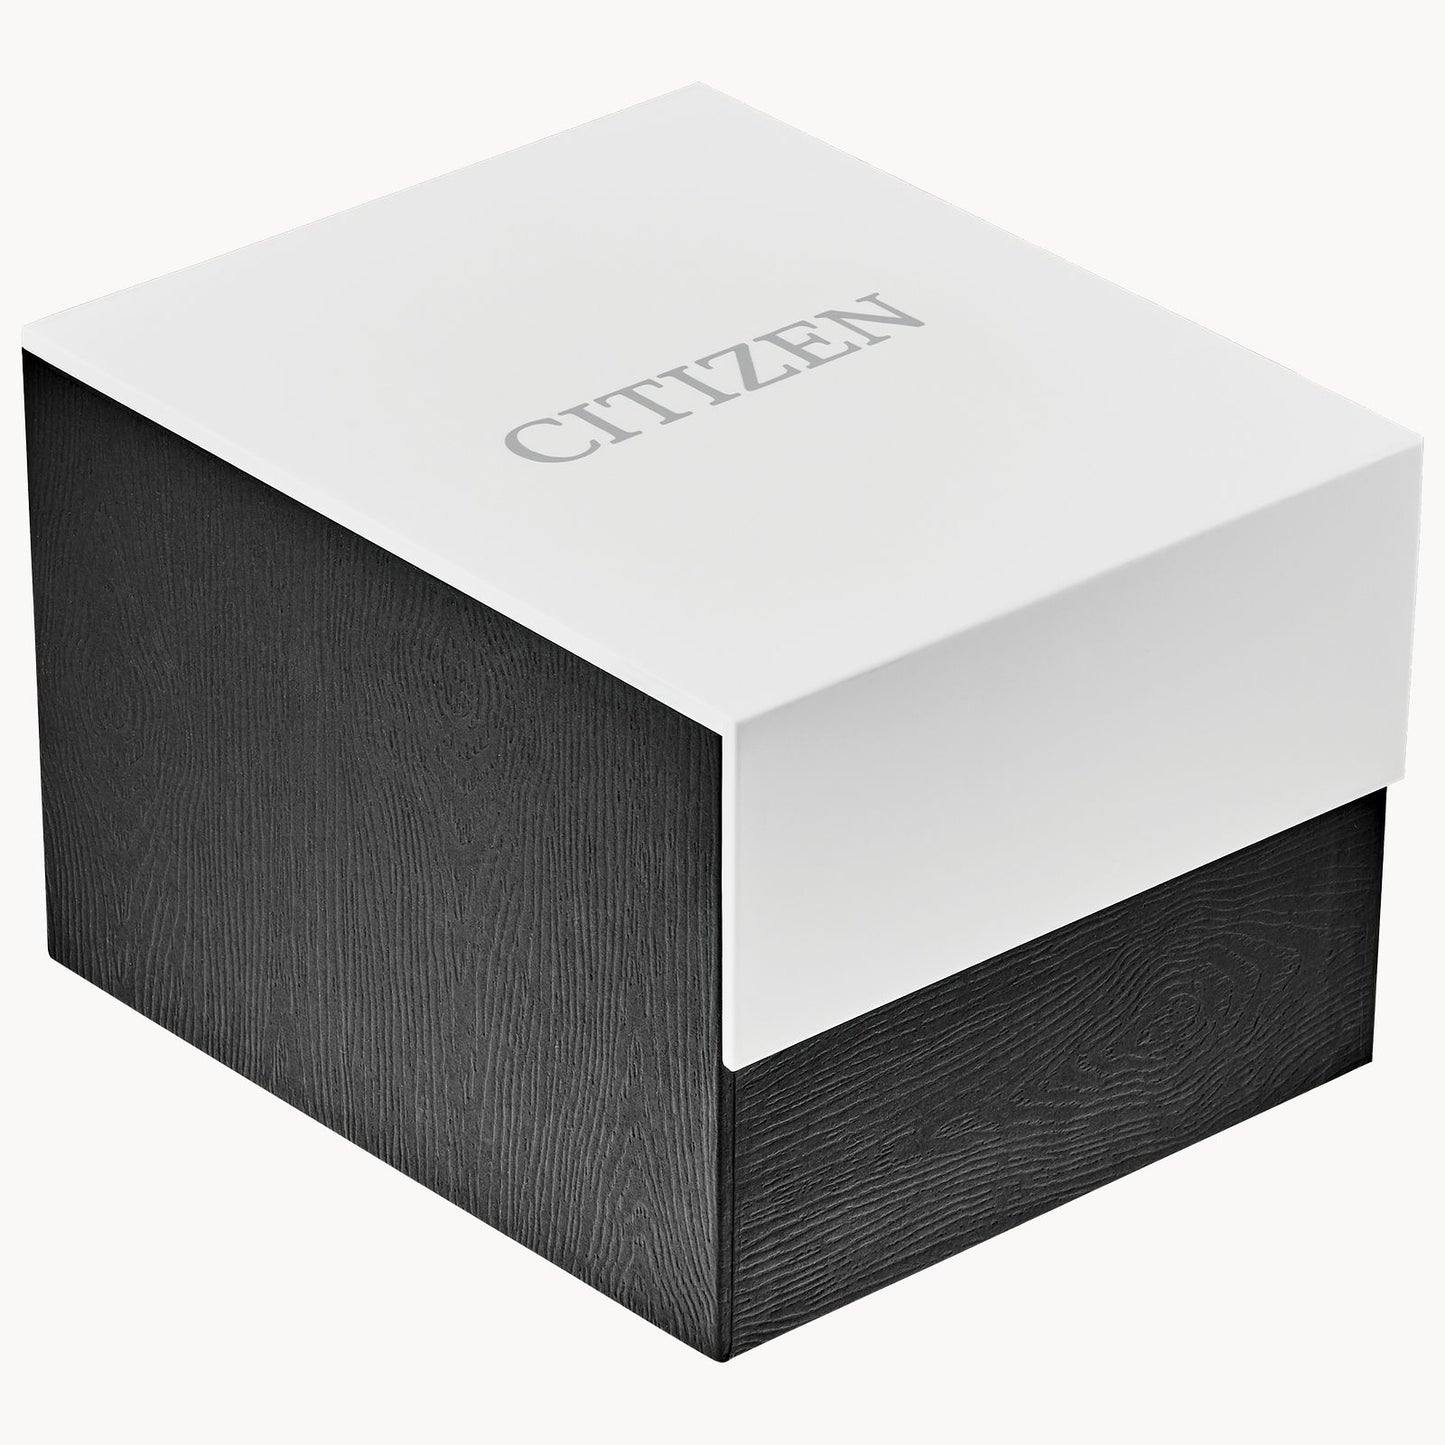 Citizen Automatic NJ0150-56E "TSUYOSA” Collection Black Dial Stainless Steel Bracelet